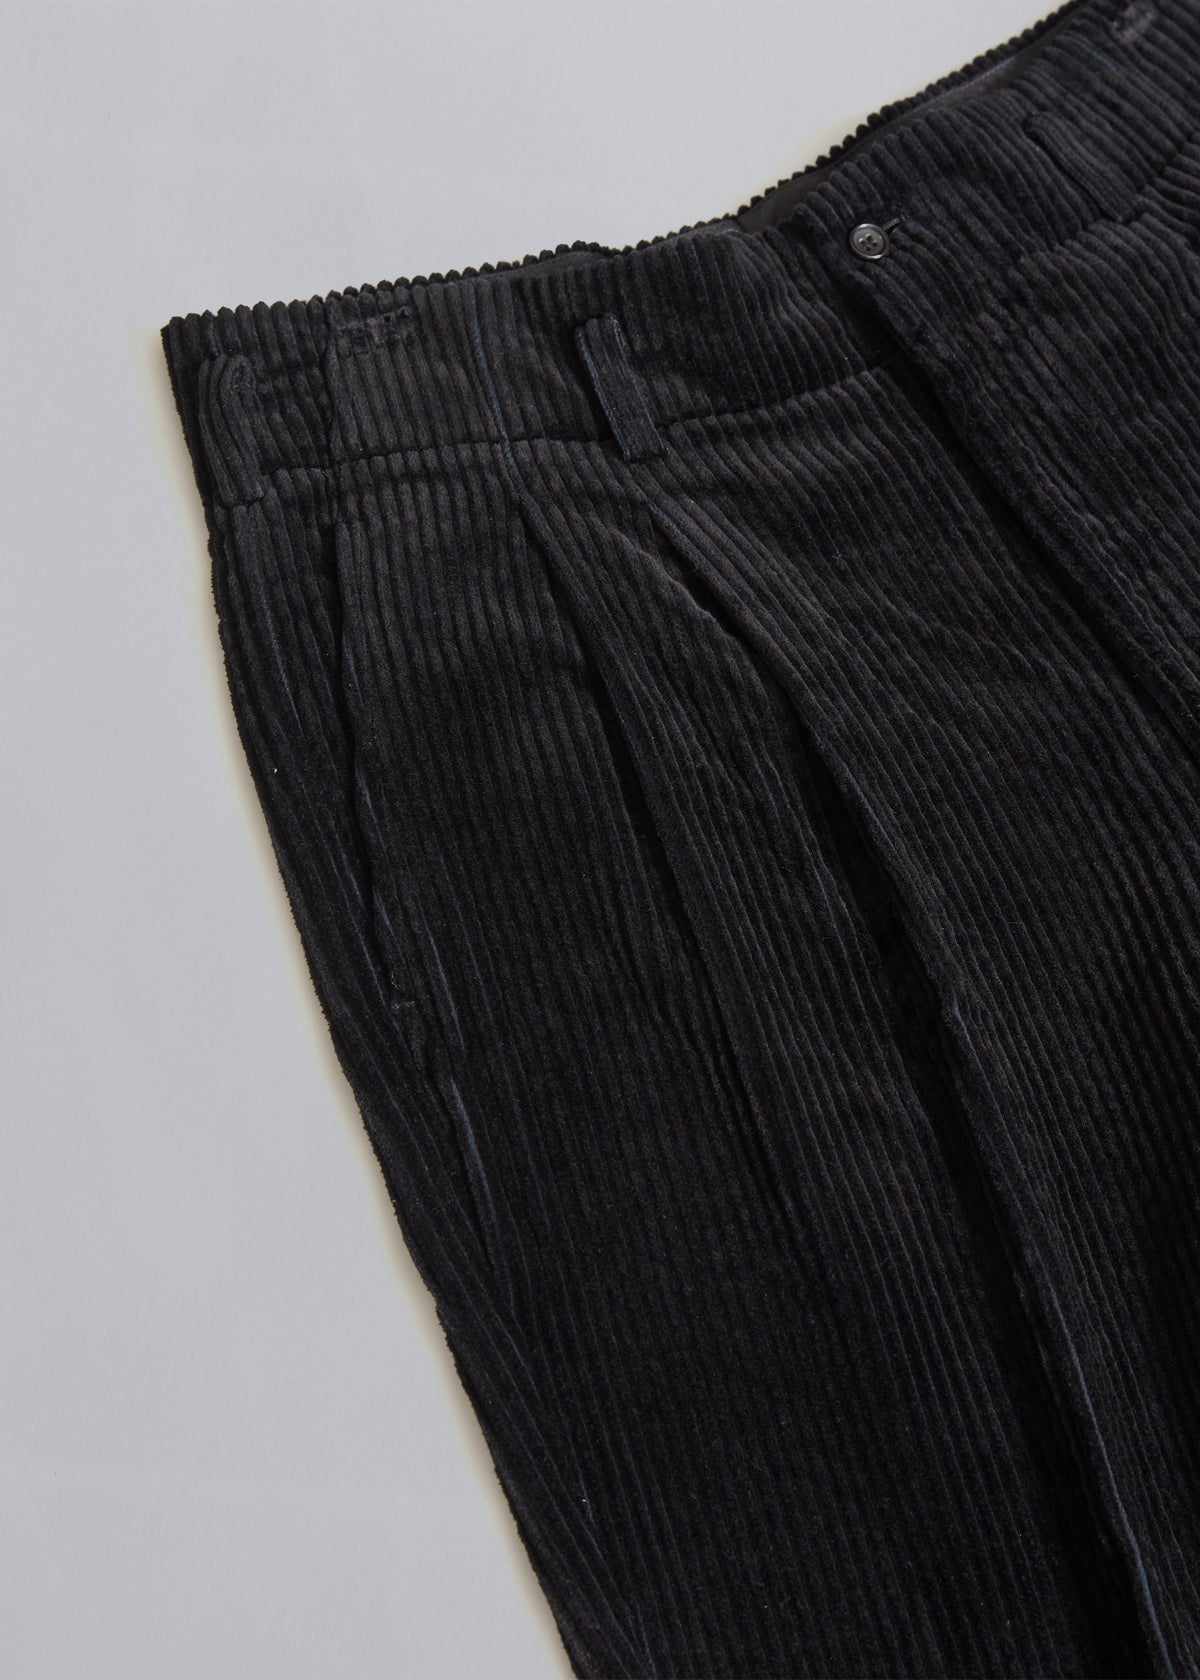 CDG Homme Black Thick Corduroy Pleated Pants 1994 - Medium